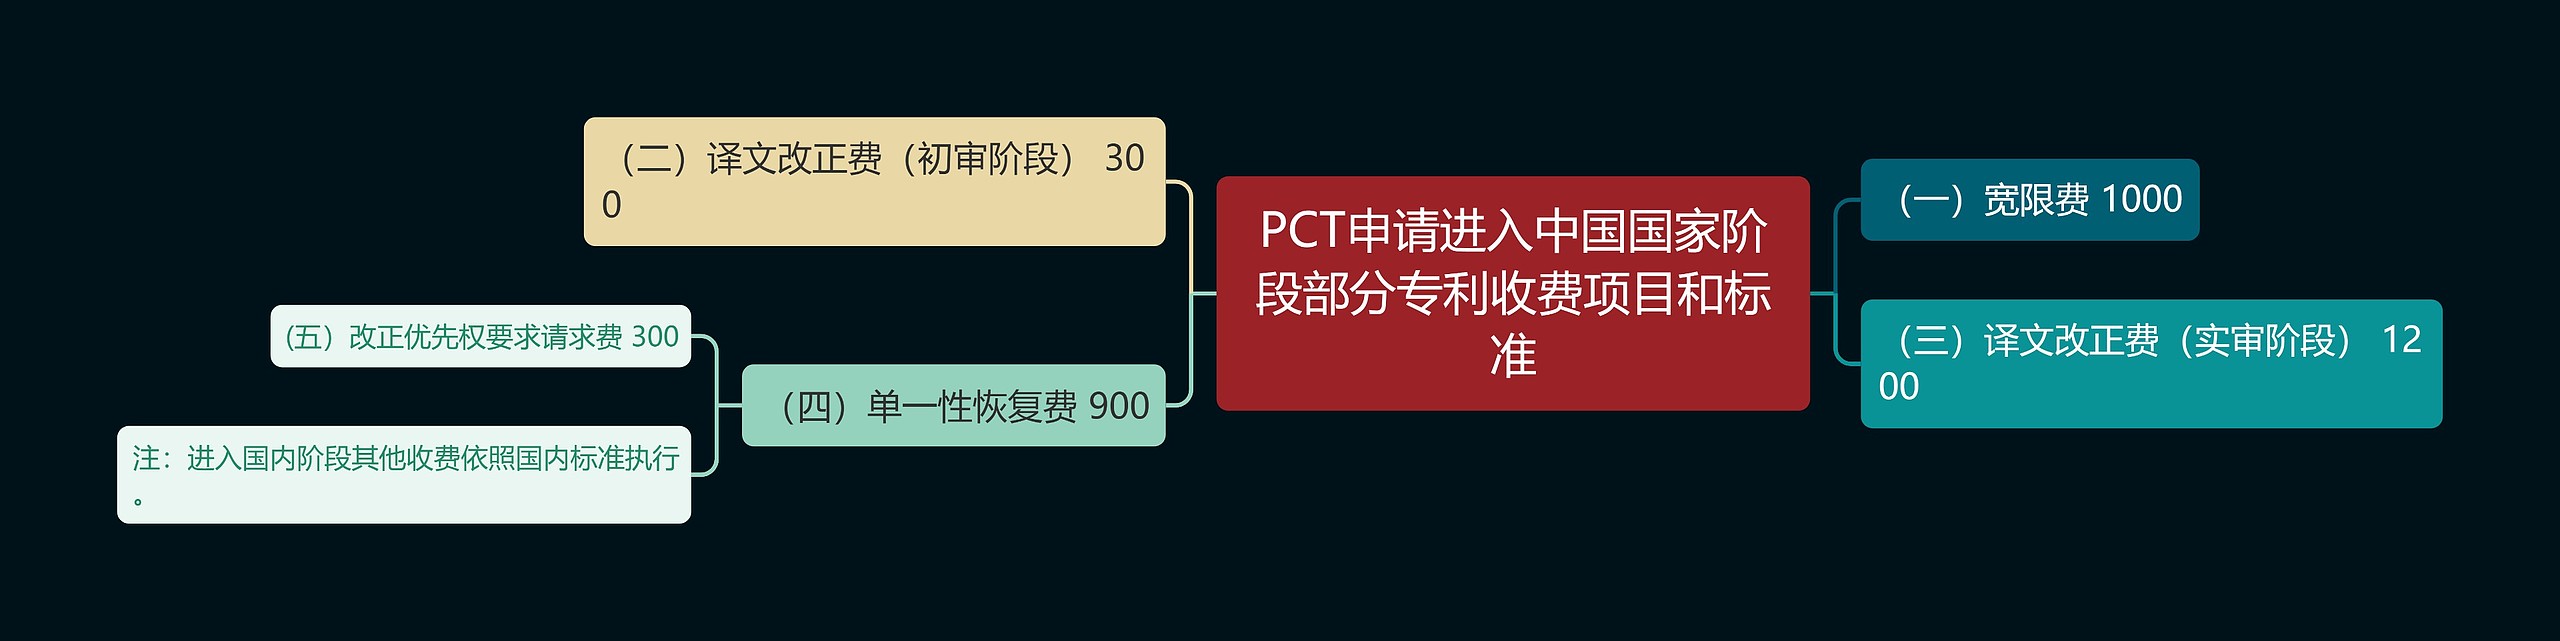 PCT申请进入中国国家阶段部分专利收费项目和标准思维导图